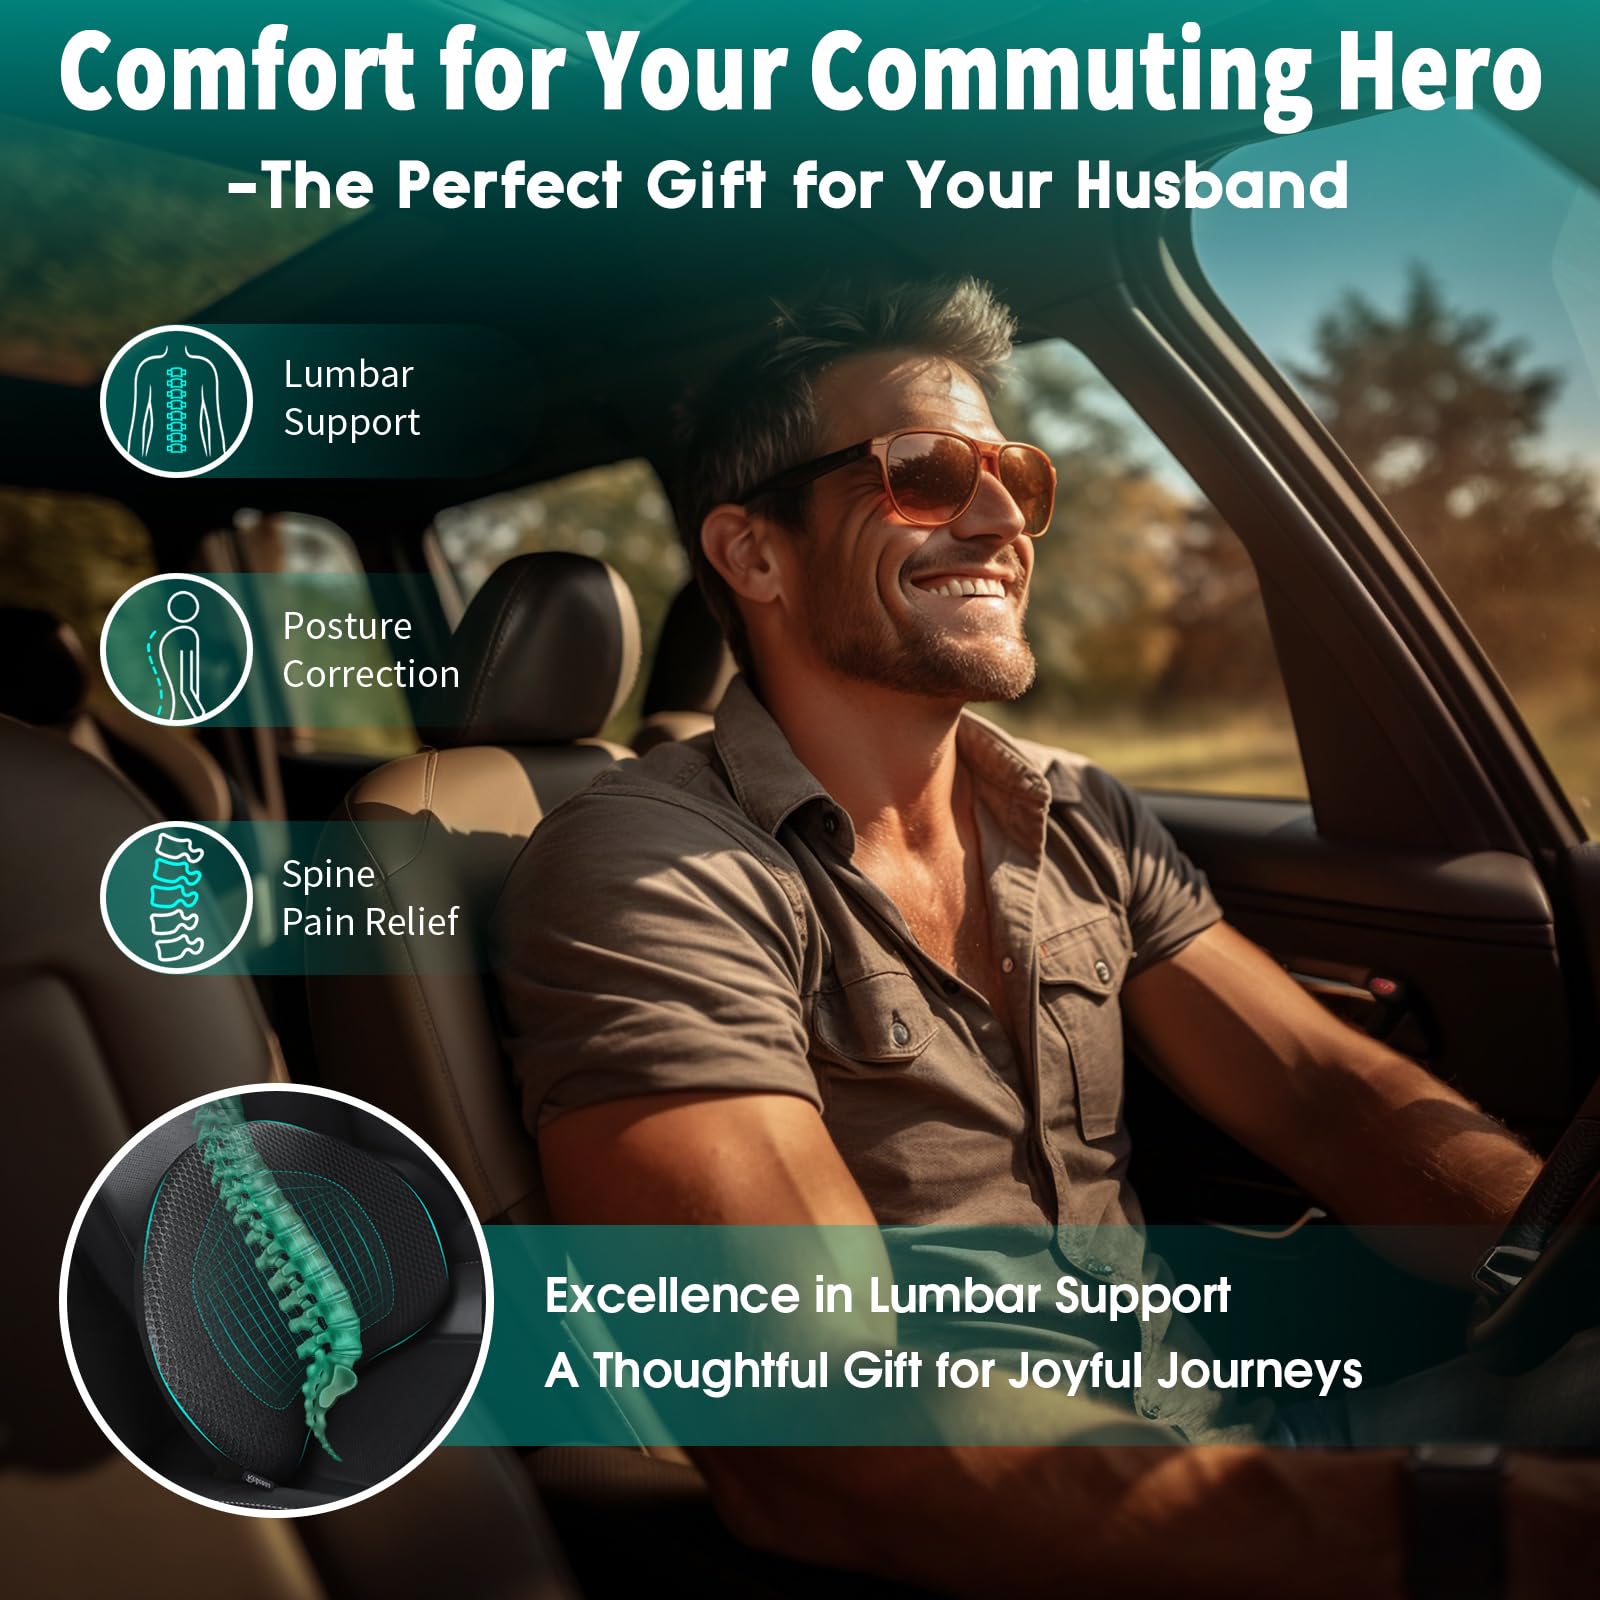 Benefits of Adding Cushions for Enhanced Carpool Comfort